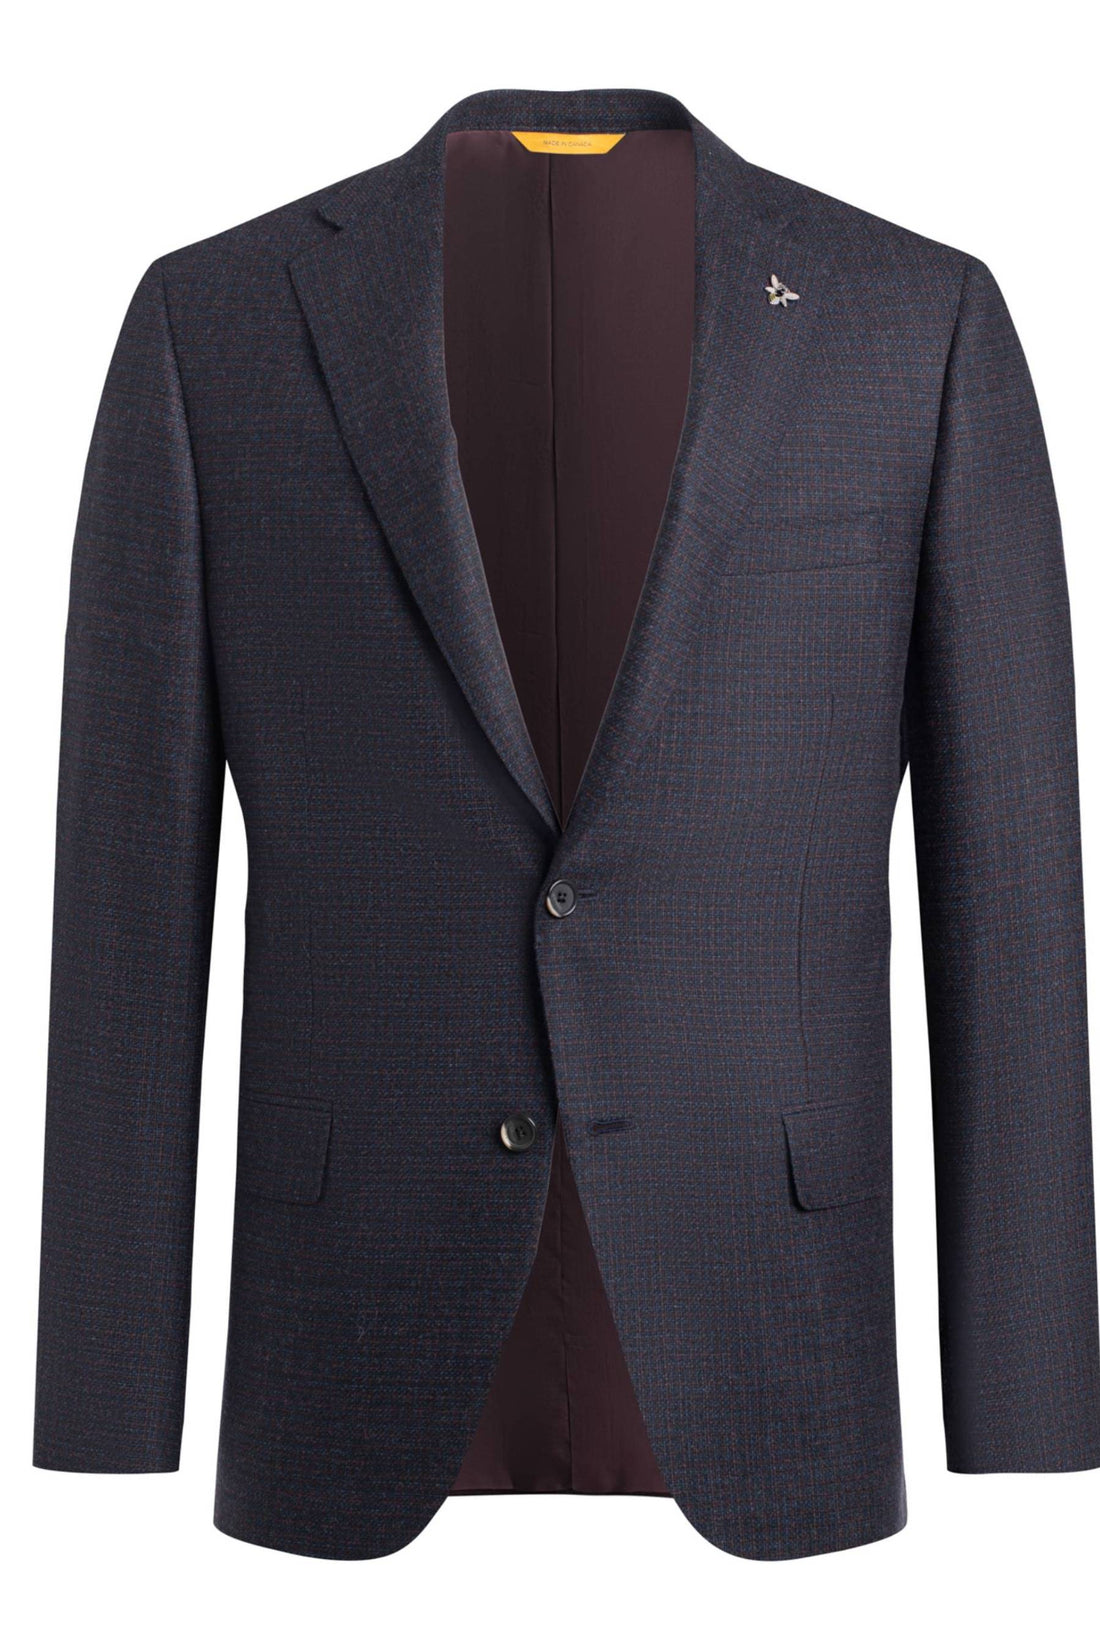 Tropical Samuelsohn – Suit Wool Silk Stripe Navy